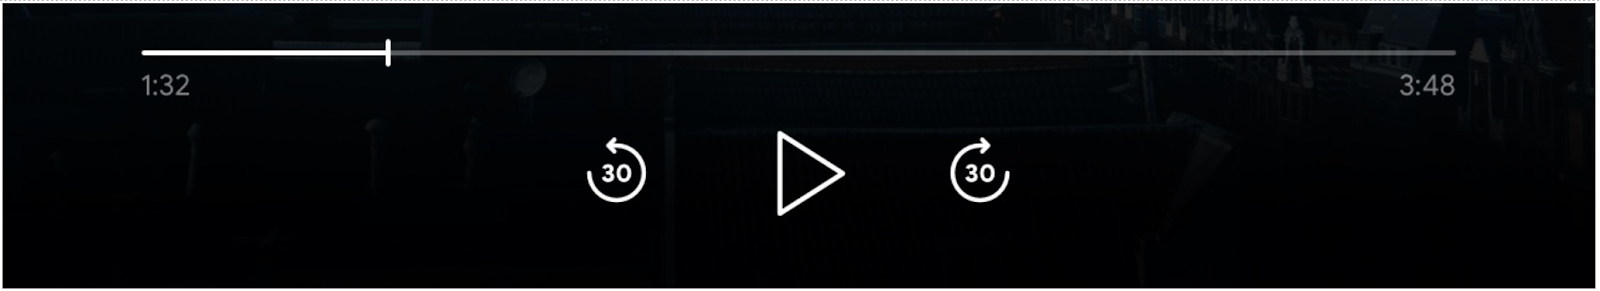 Image of media player controls: progress bar, 'Play' button, 'Skip forward' and 'Skip backward' buttons enabled